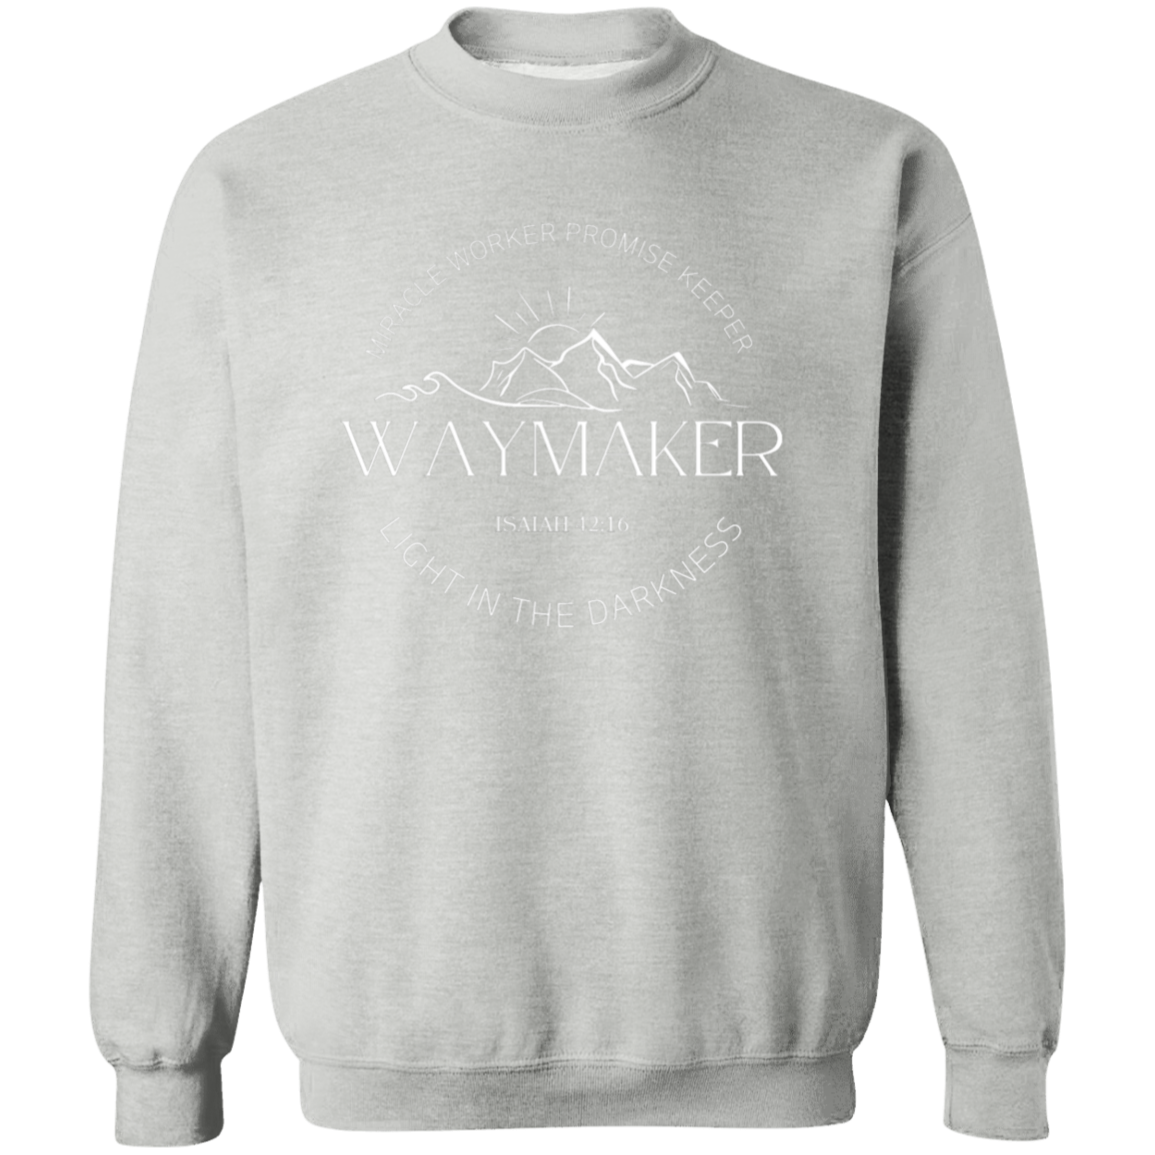 Waymaker Sweatshirt, Faith Sweatshirt, Christian Sweatshirt, Jesus Sweatshirt, Bible Verse, Faith Shirt, Christian Gift